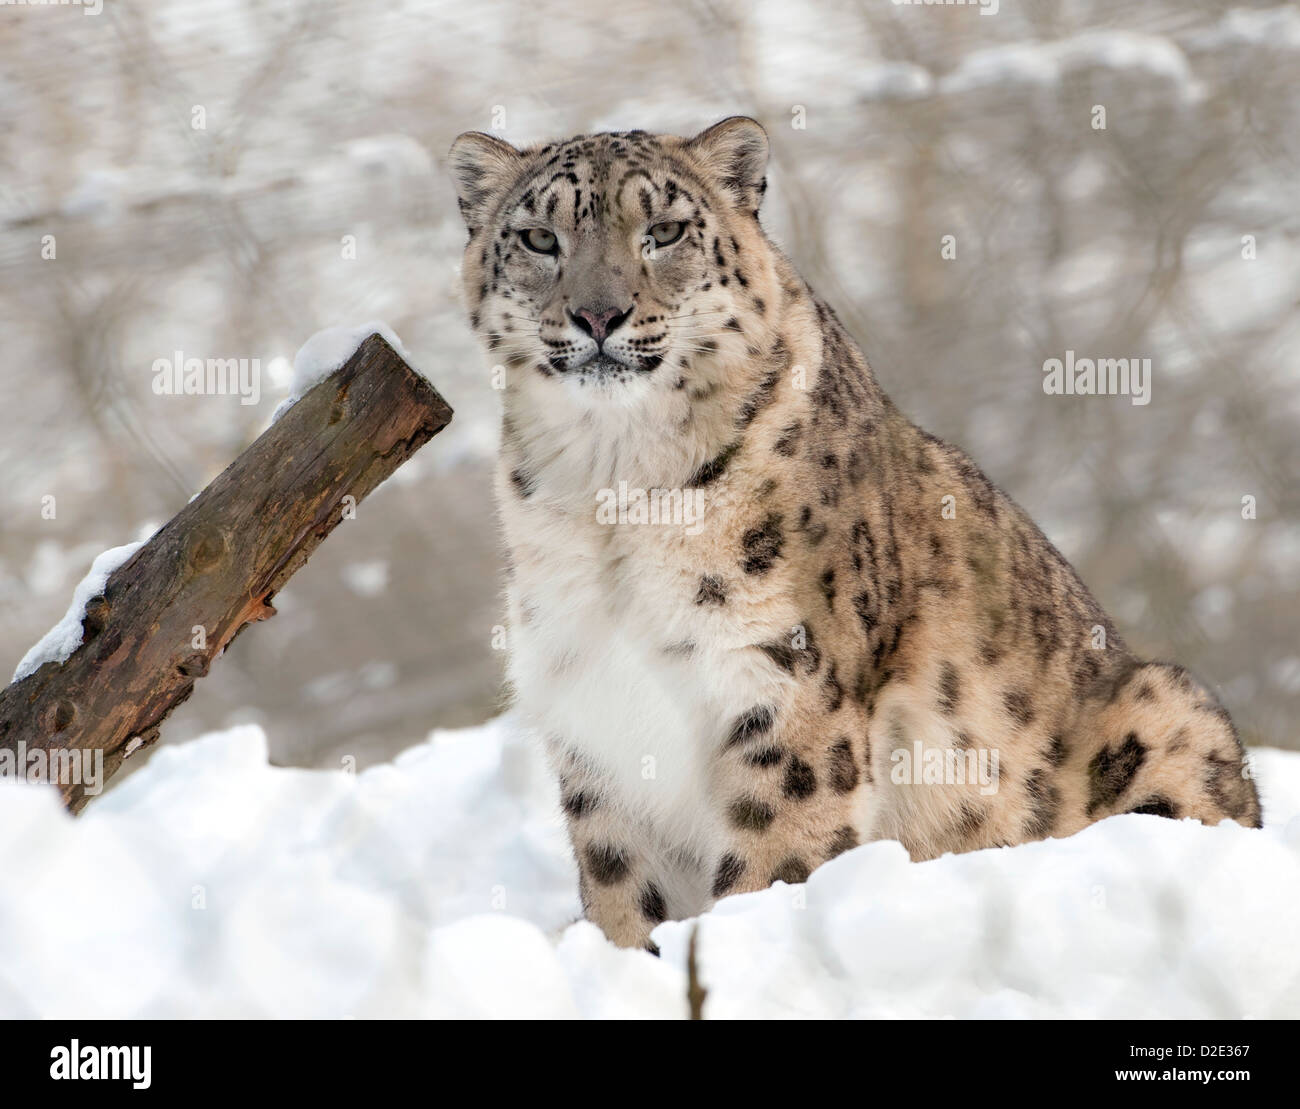 Female snow leopard sitting in snow Stock Photo